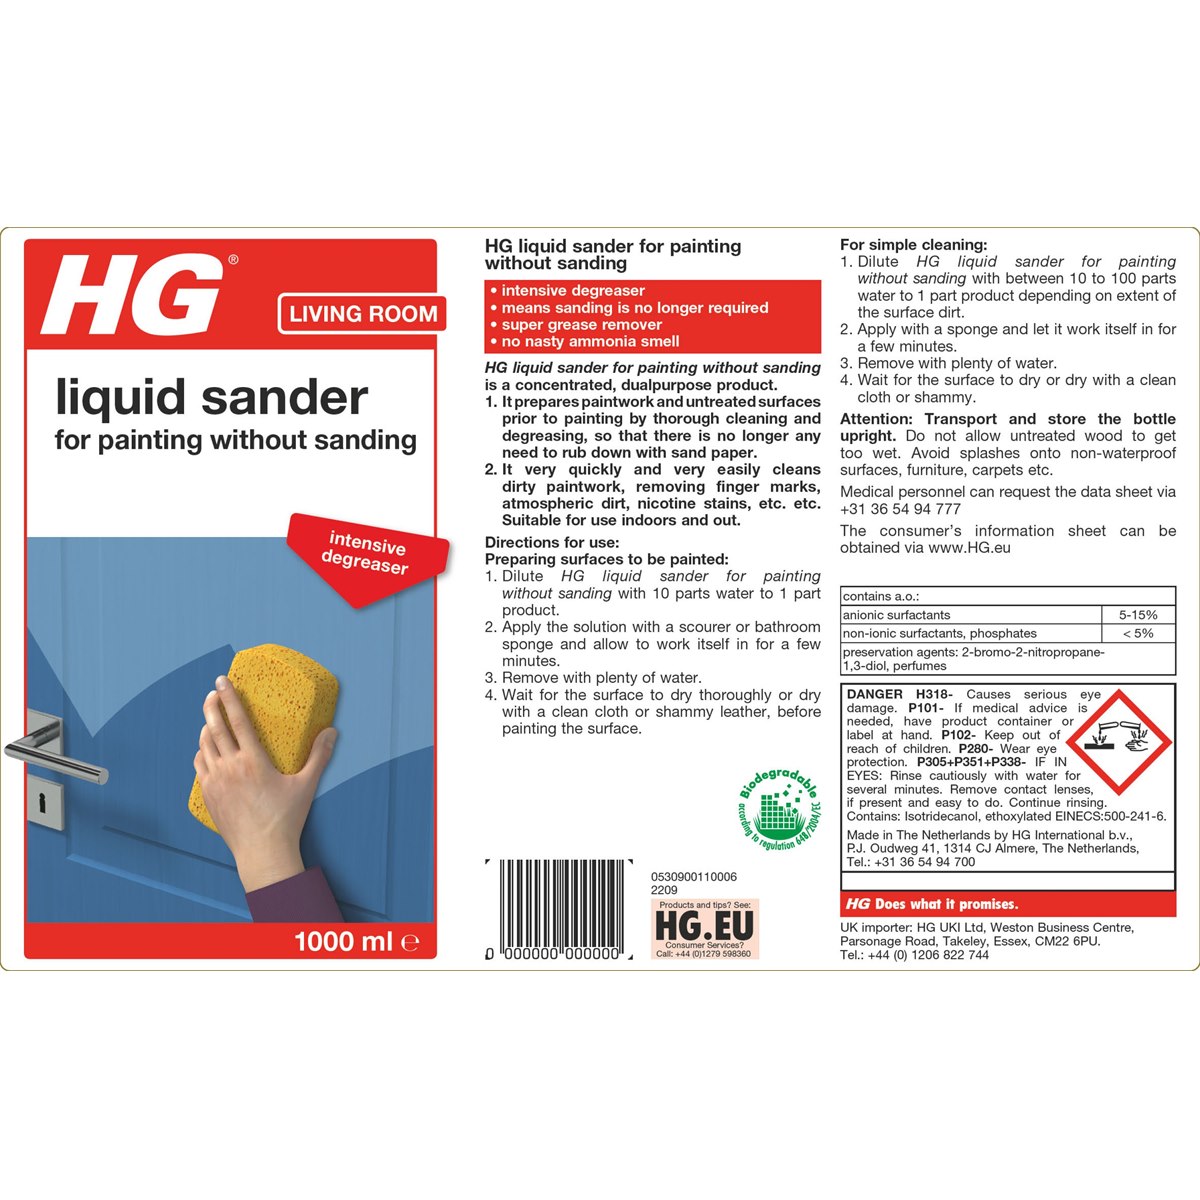 HG Liquid Sander Usage Instructions